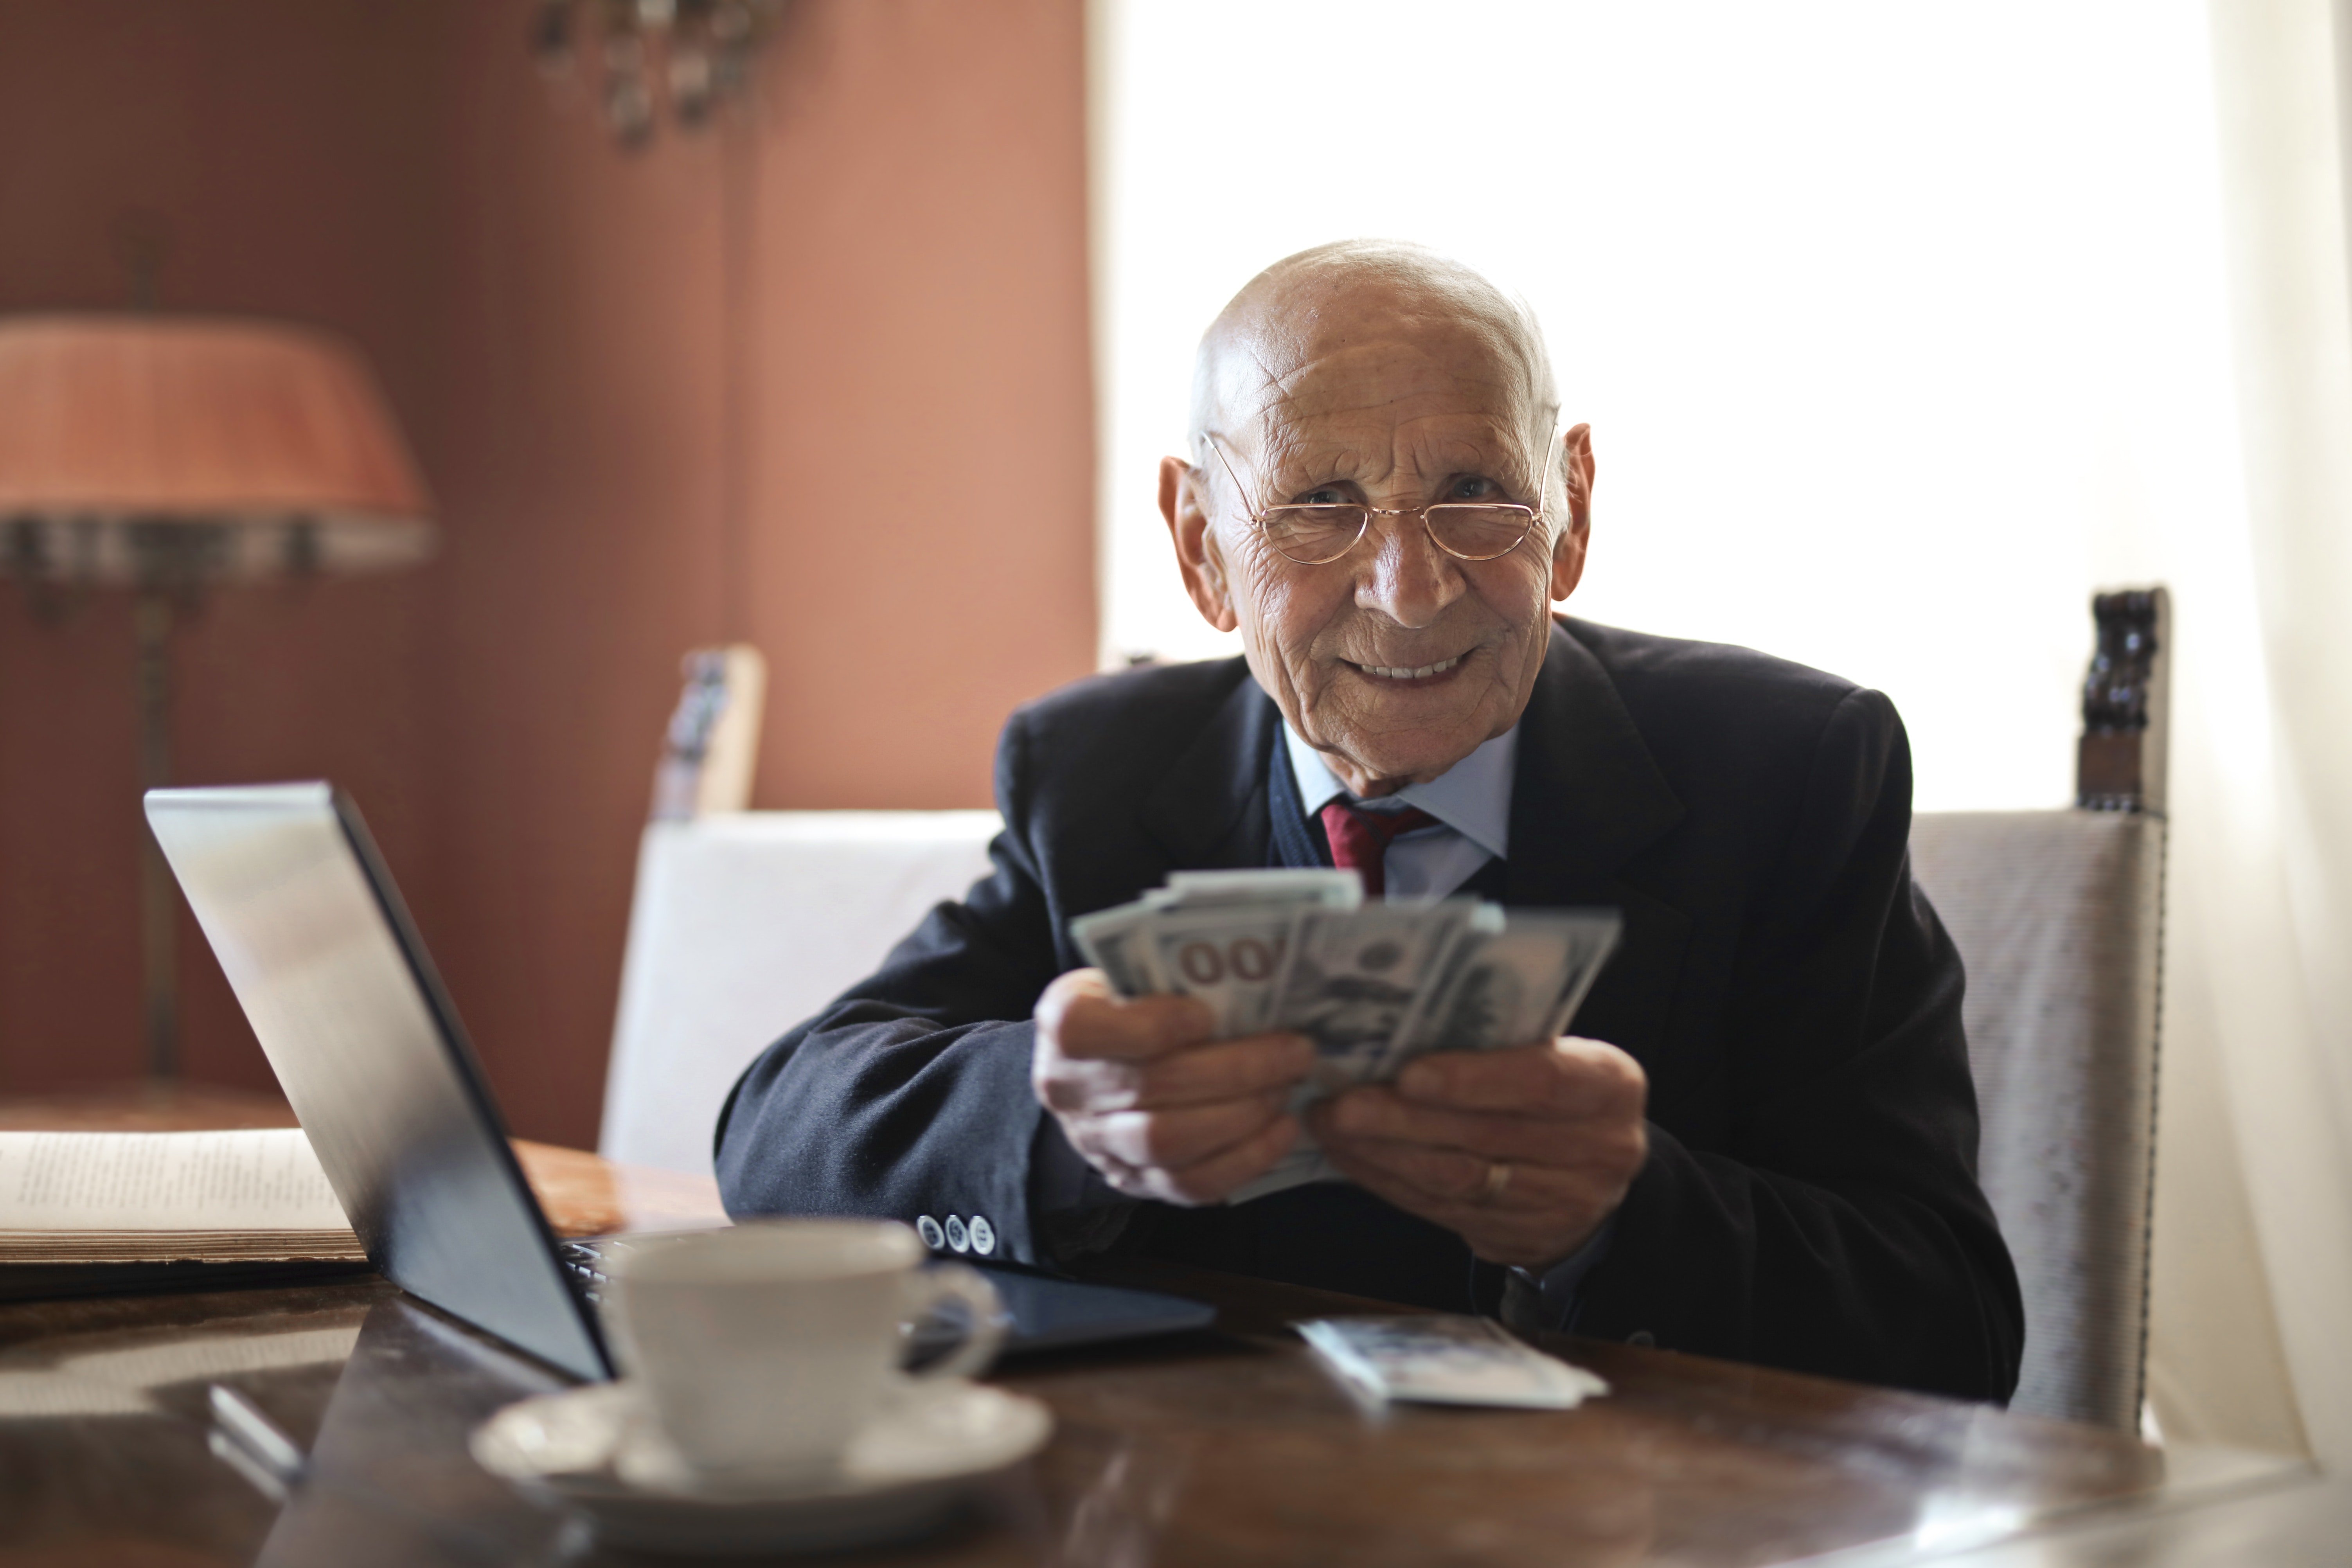 An elderly man holding money | Photo: Pexels